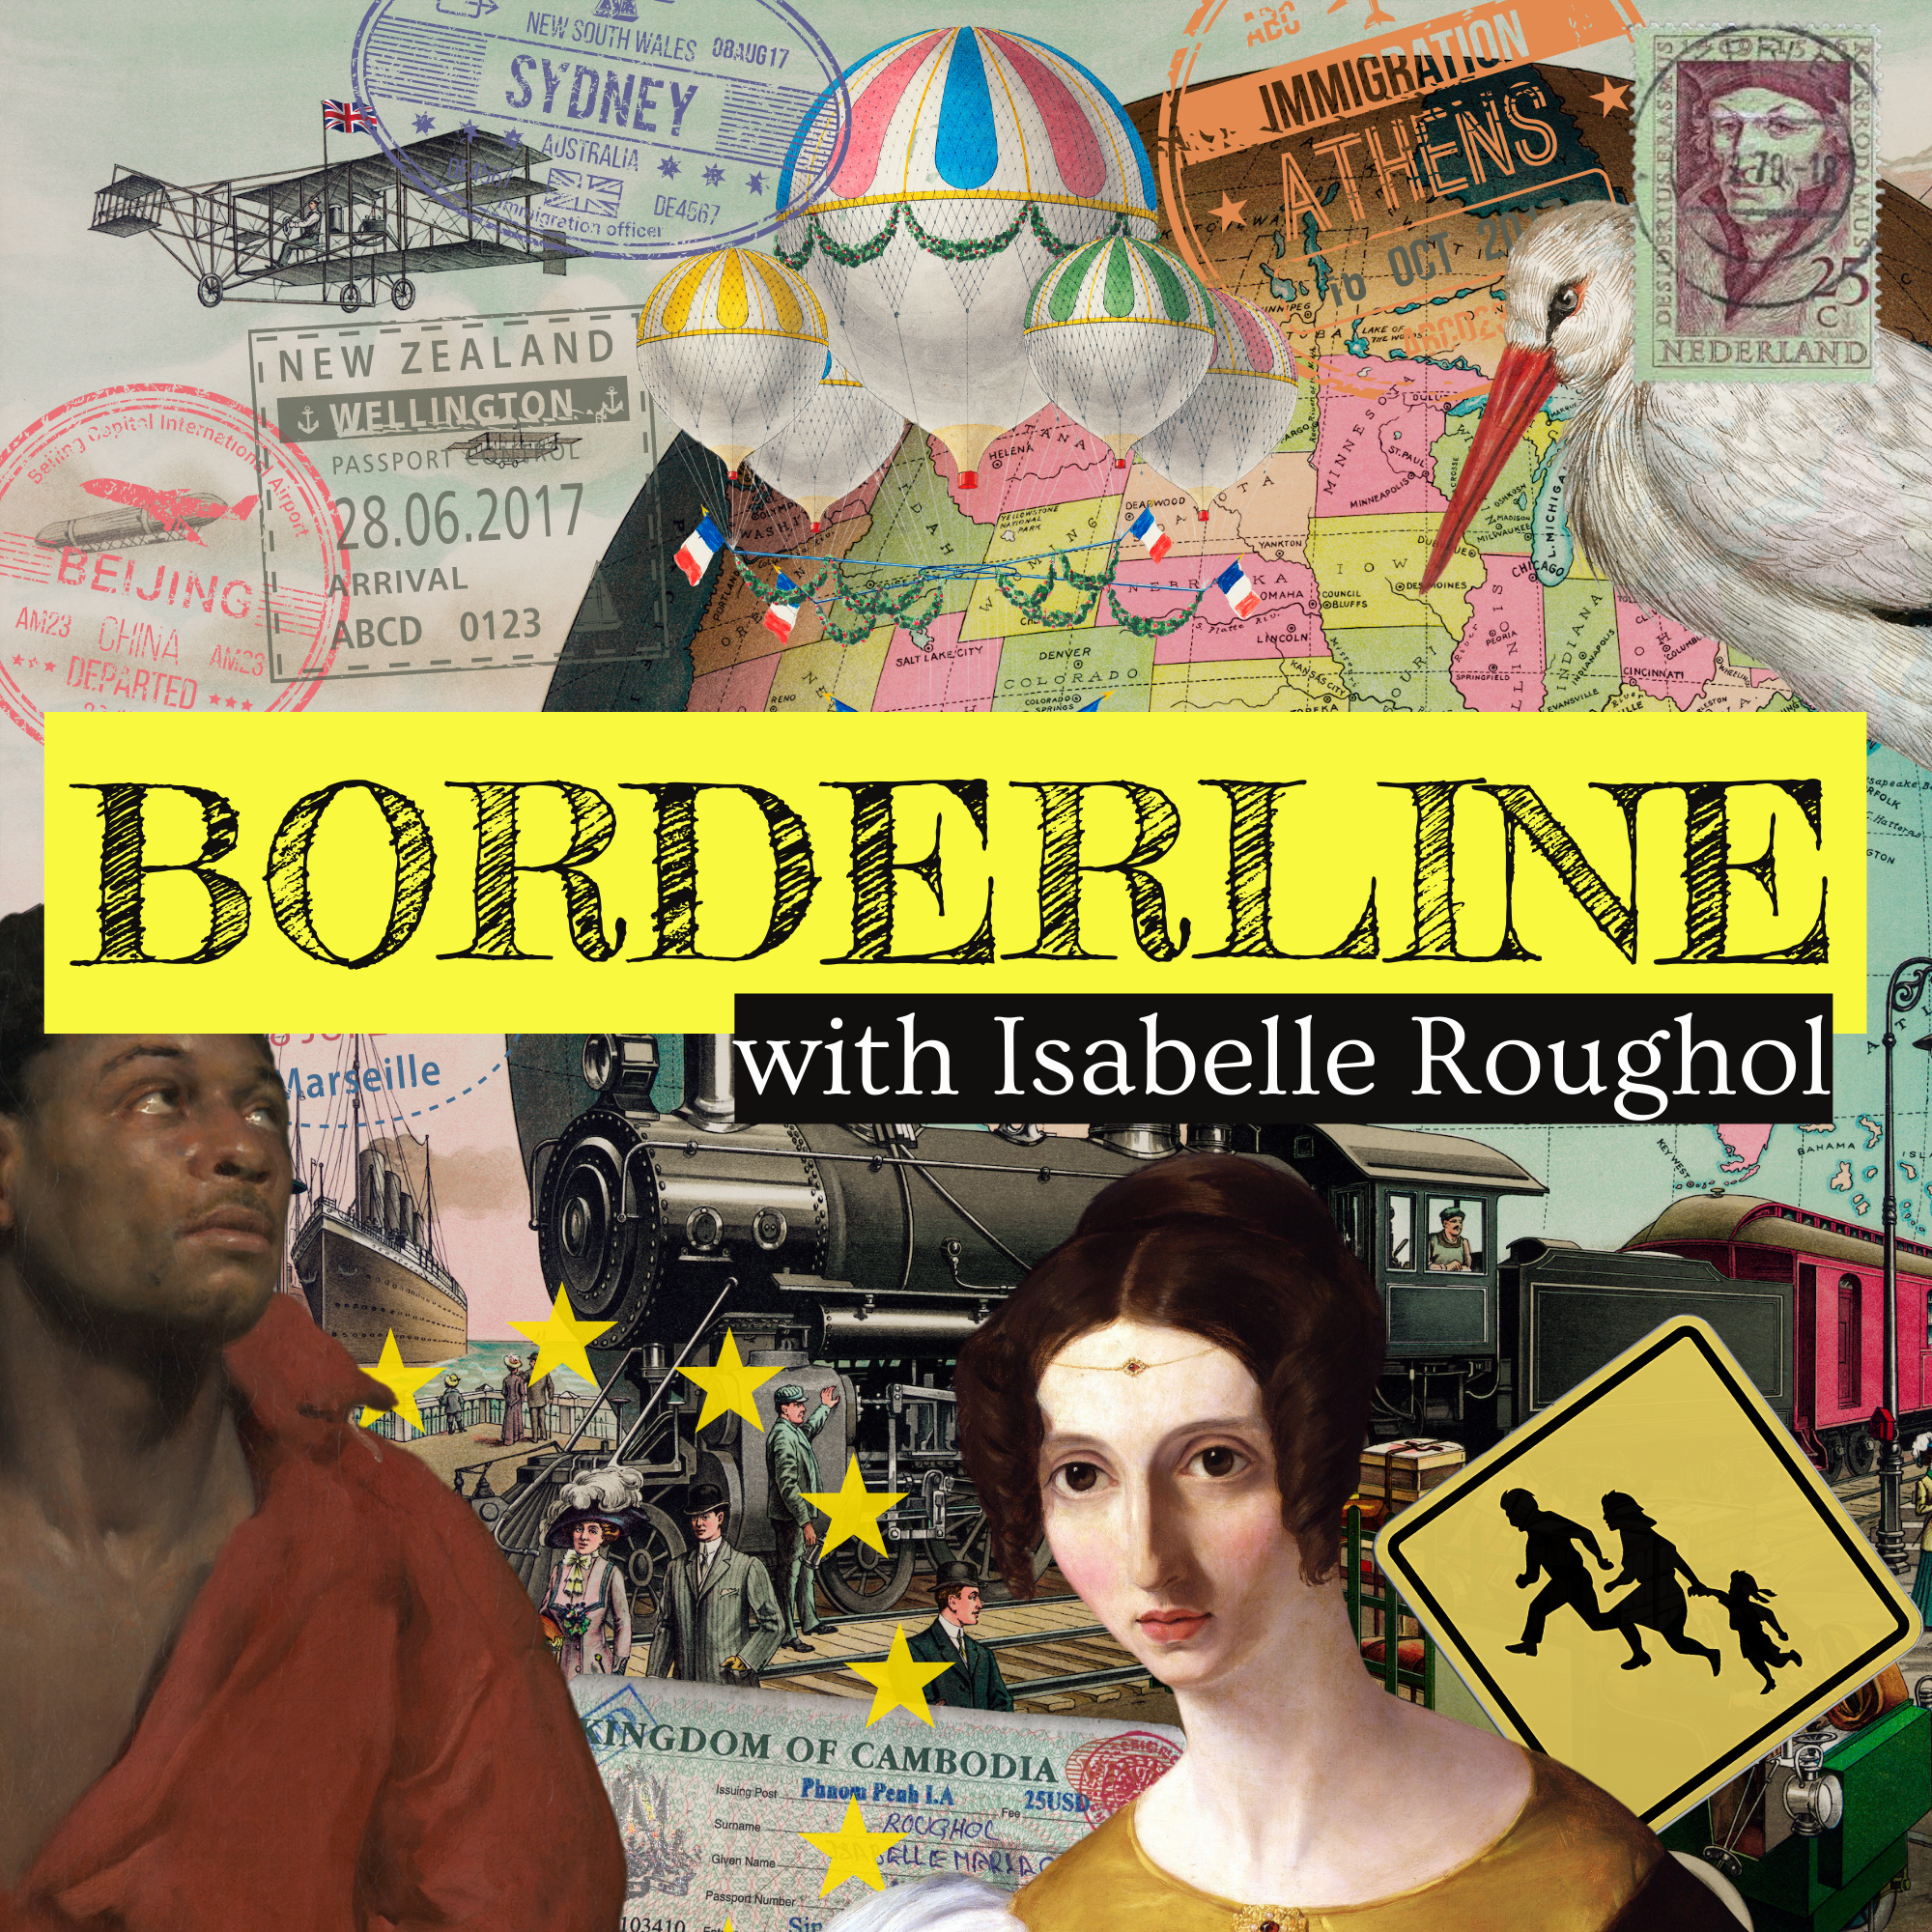 What's happening in Borderline's cover art?